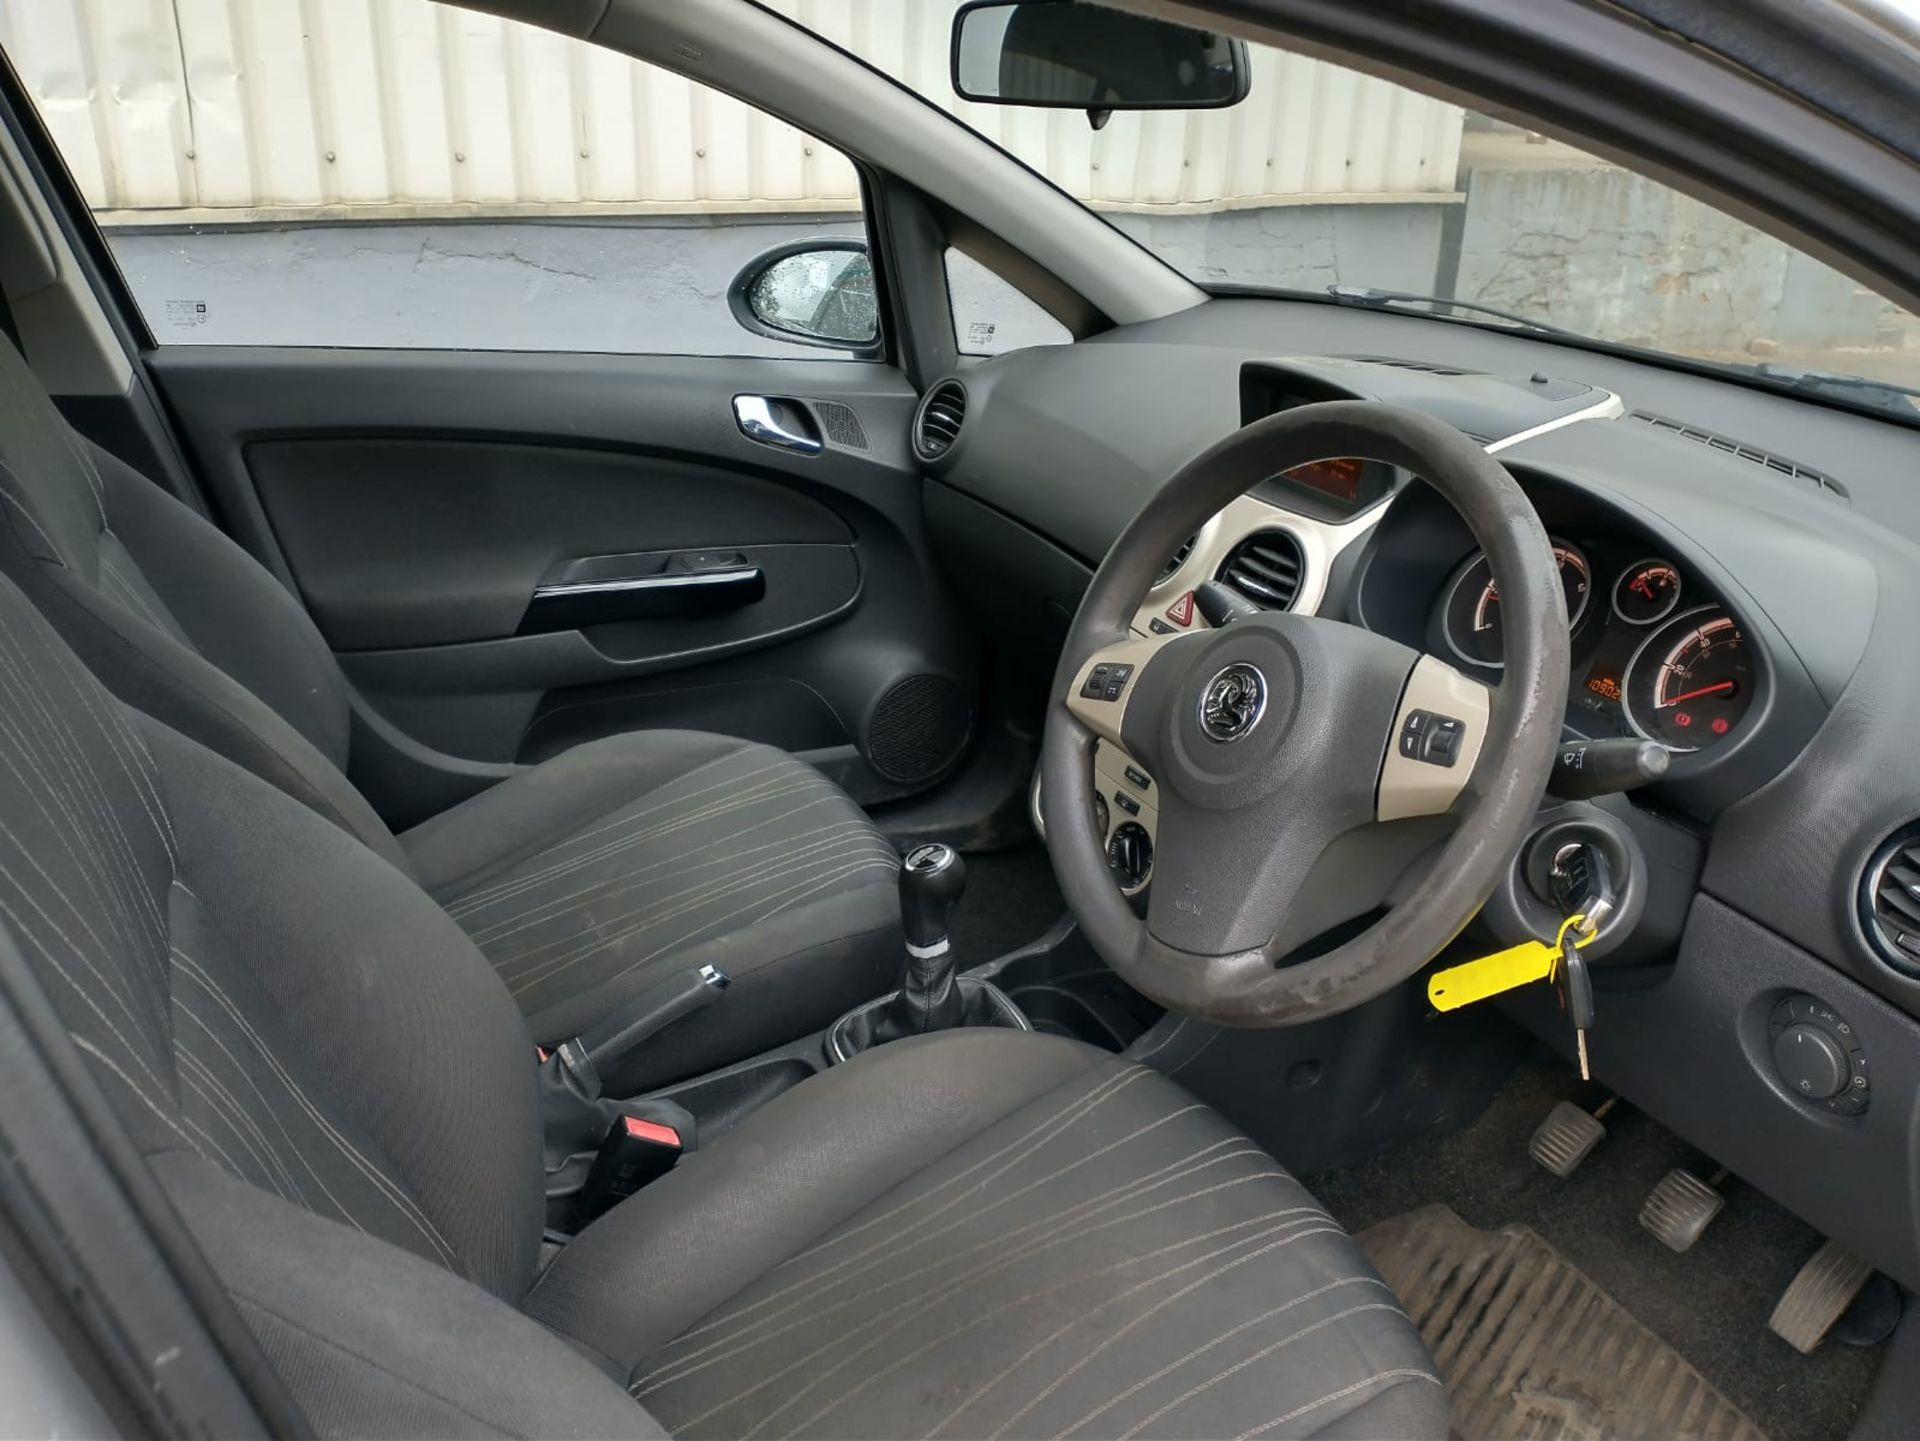 2008 Vauxhall Corsa 1.2 CDTI Club A/C 5Dr hatchback - Image 13 of 15